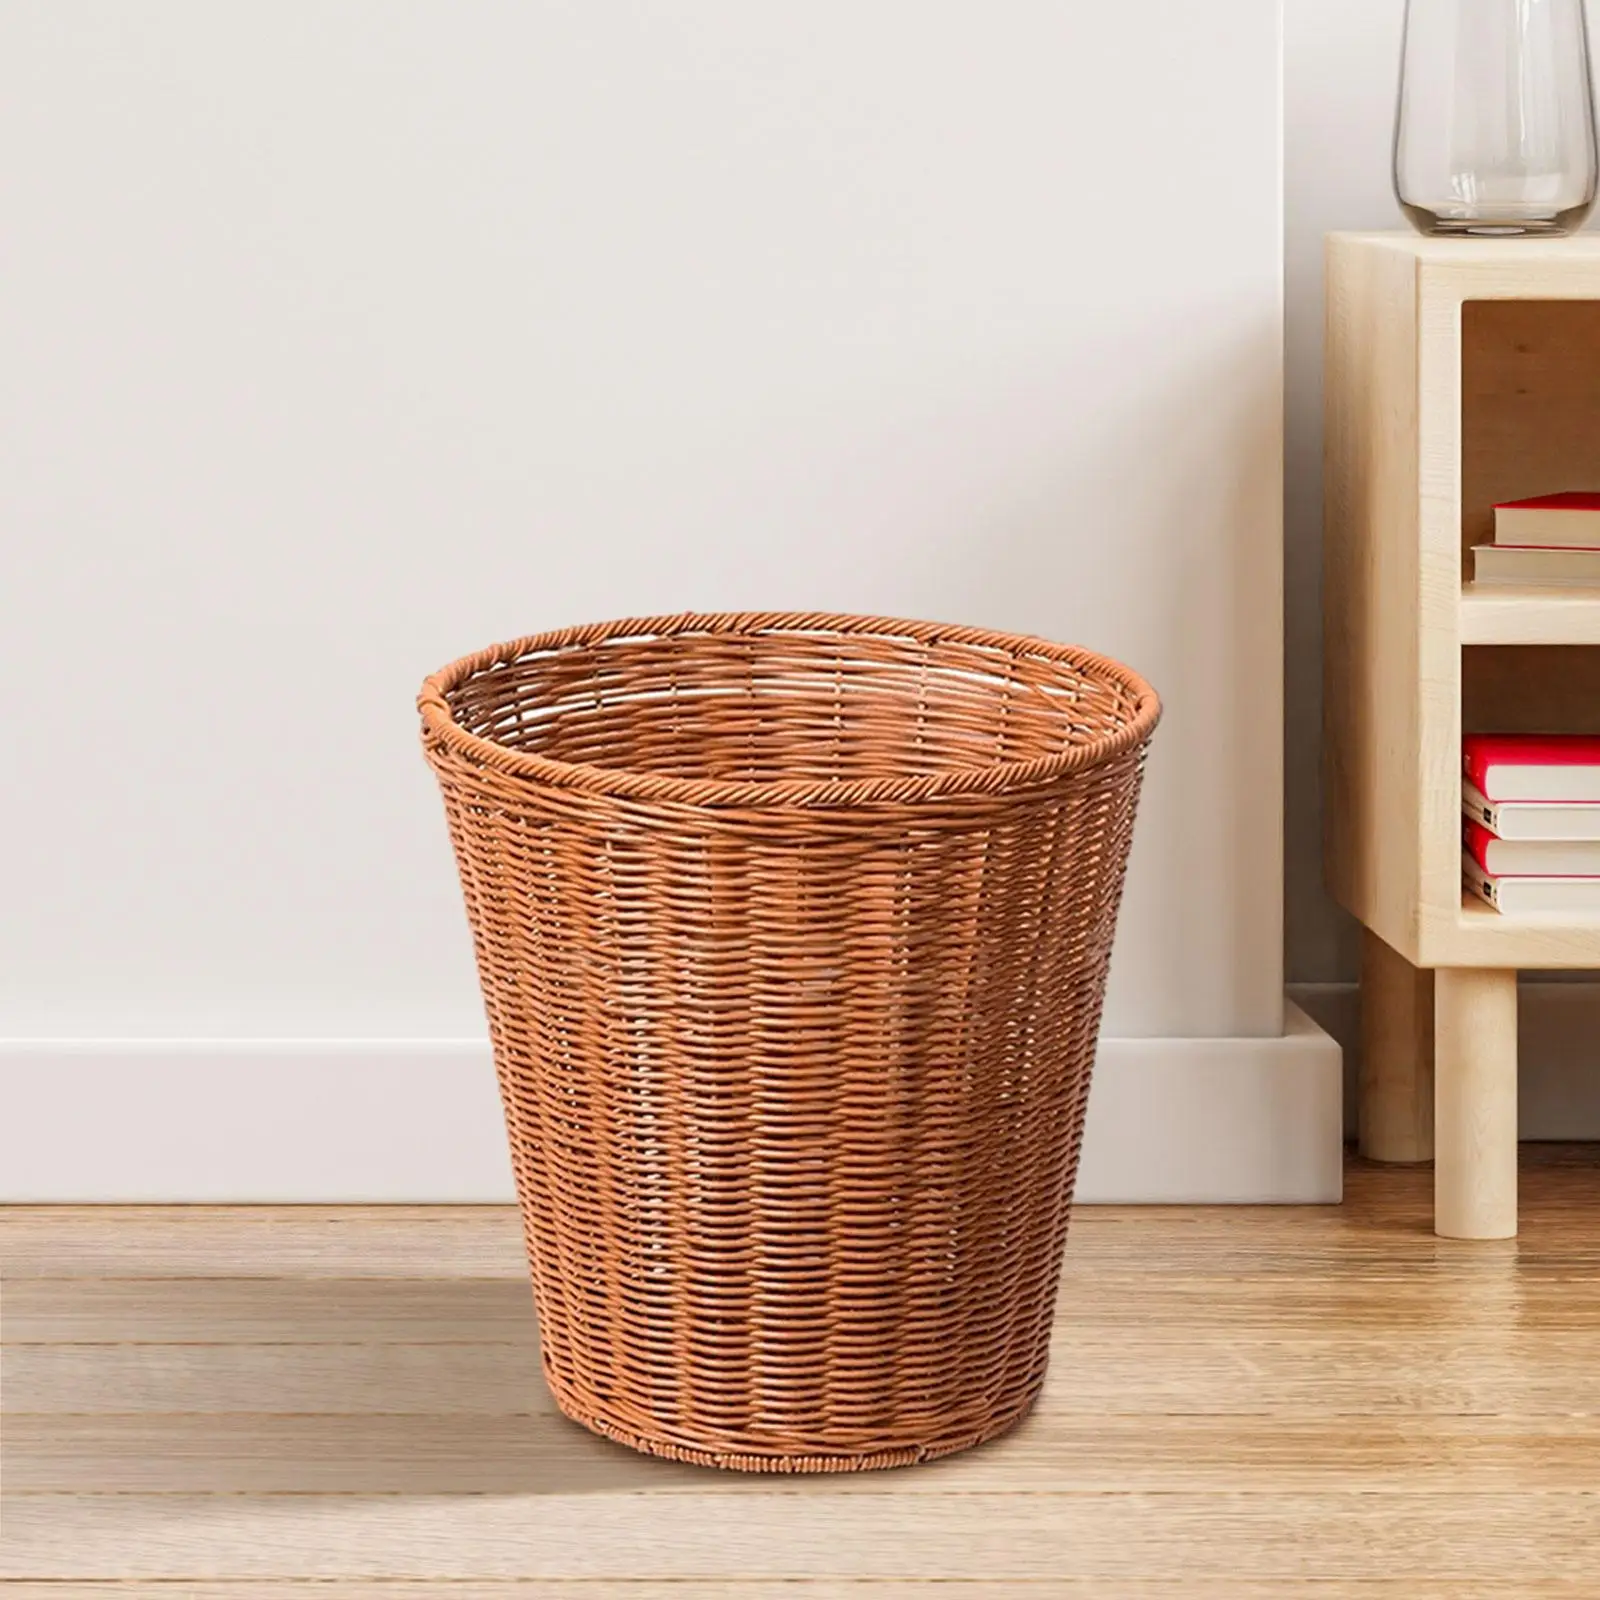 Wicker Trash Can Woven Wastebasket Round Imitation Rattan Waste Basket Laundry Hamper for Living Room Home Dorm Office Playroom